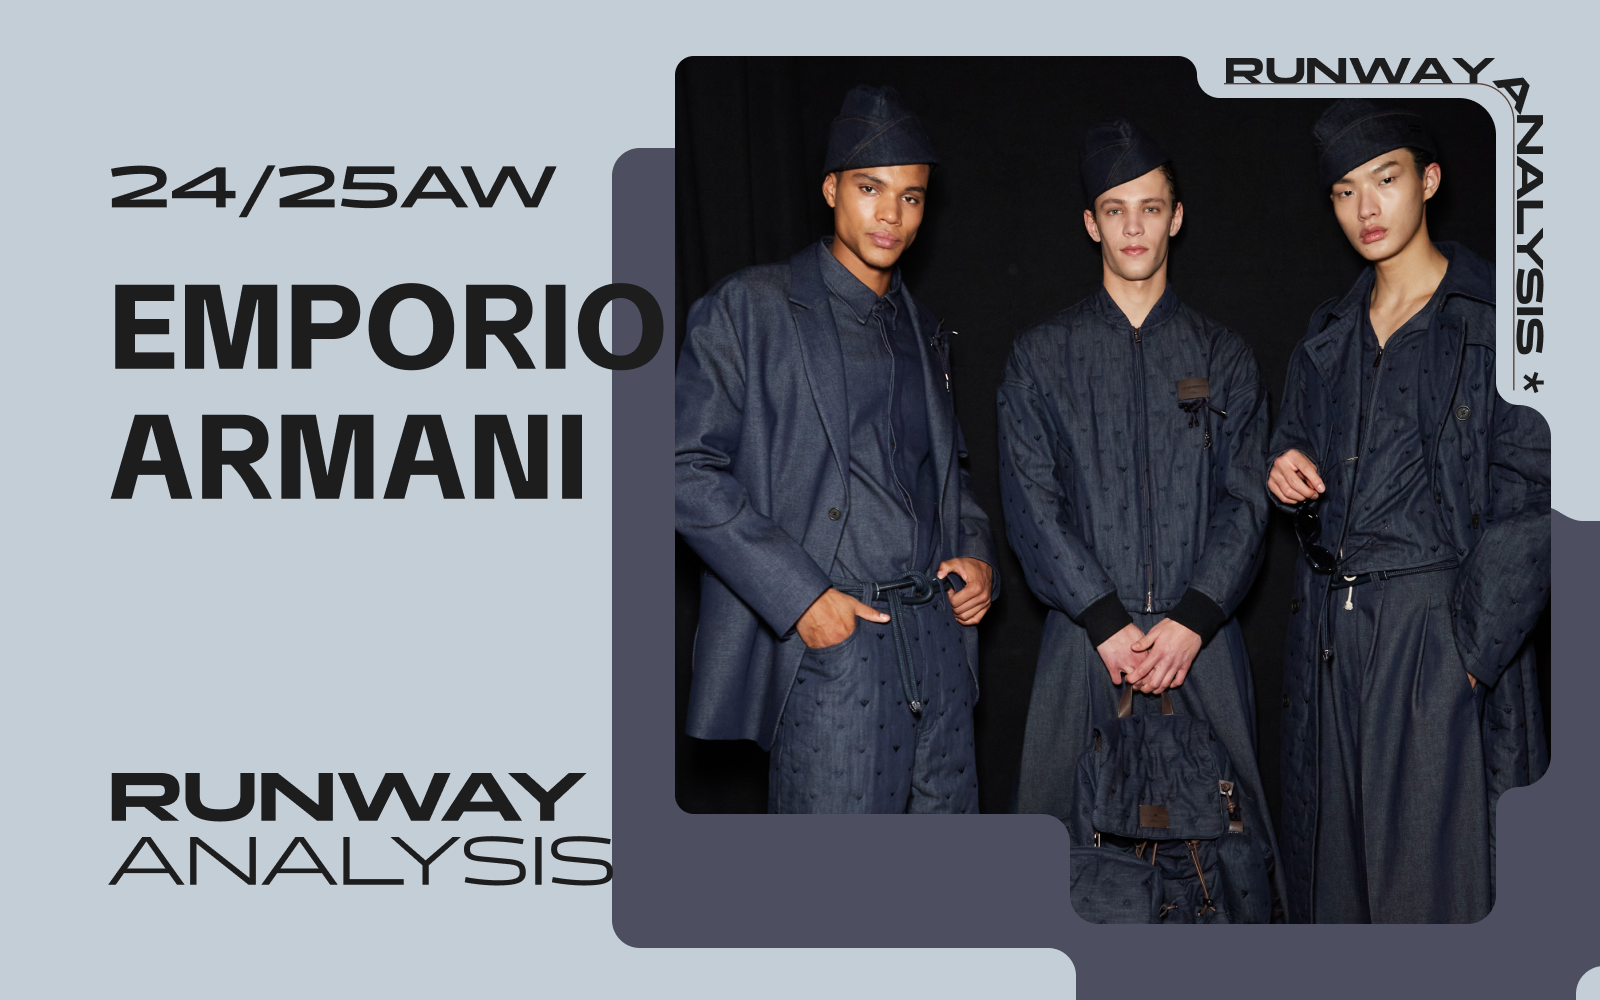 Maritime Adventure -- The Menswear Runway Analysis of Emporio Armani